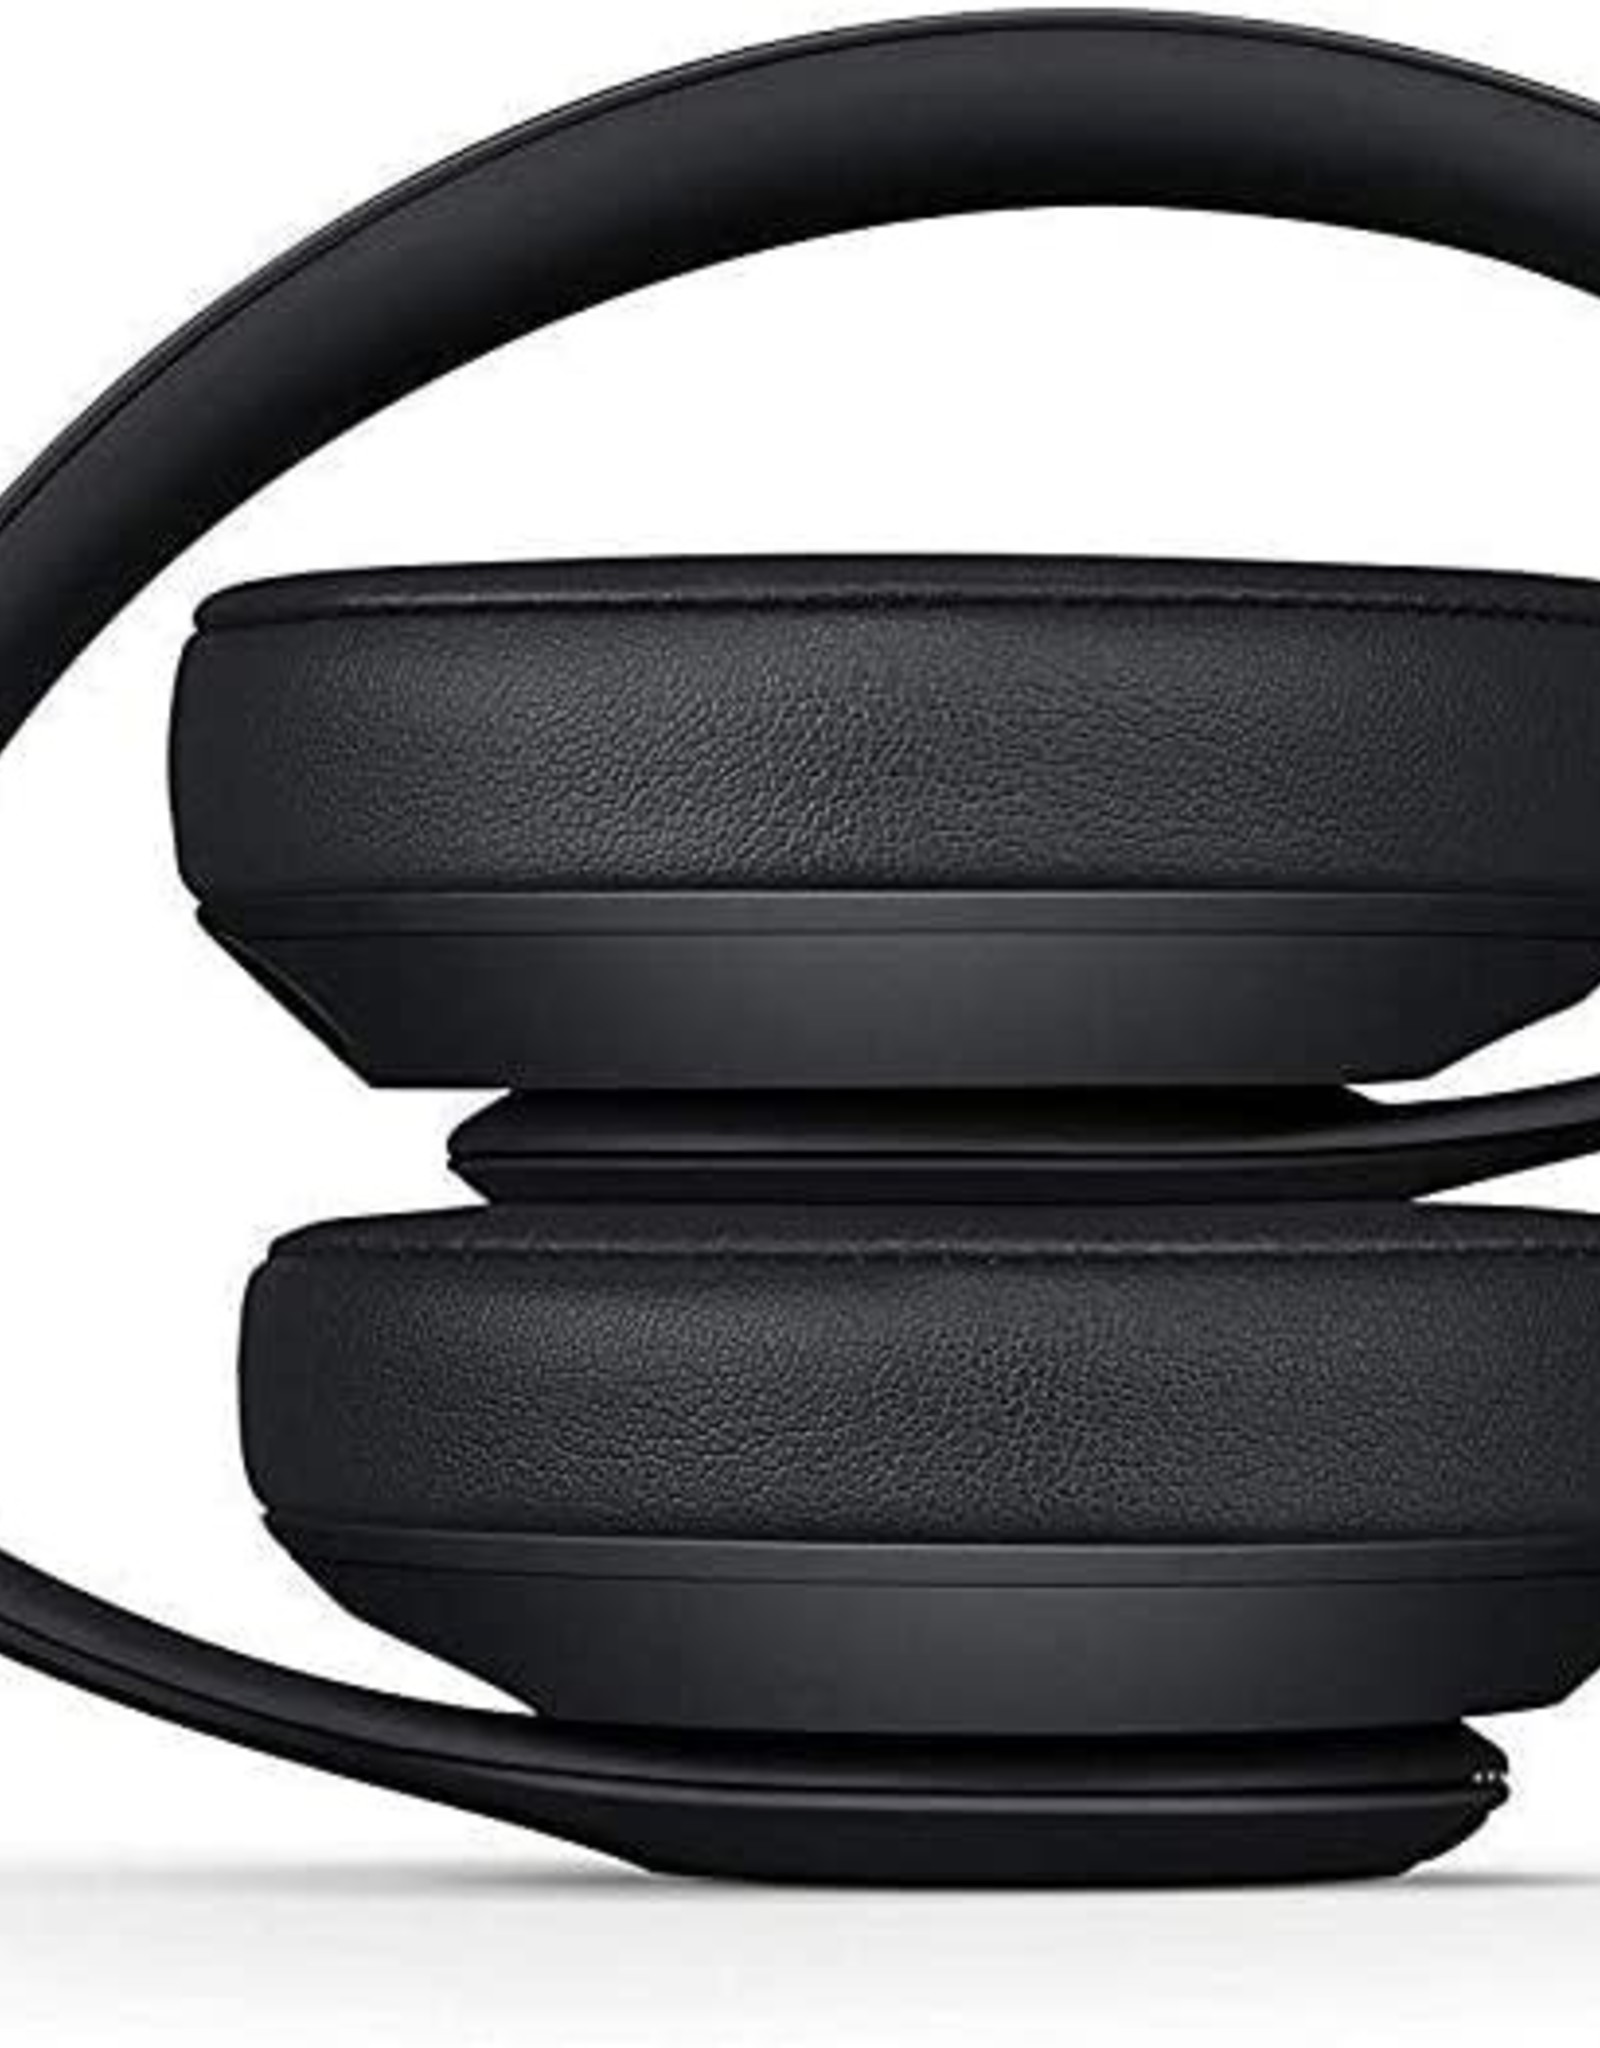 Beats Studio3 Wireless Noise Cancelling Over-Ear Headphones